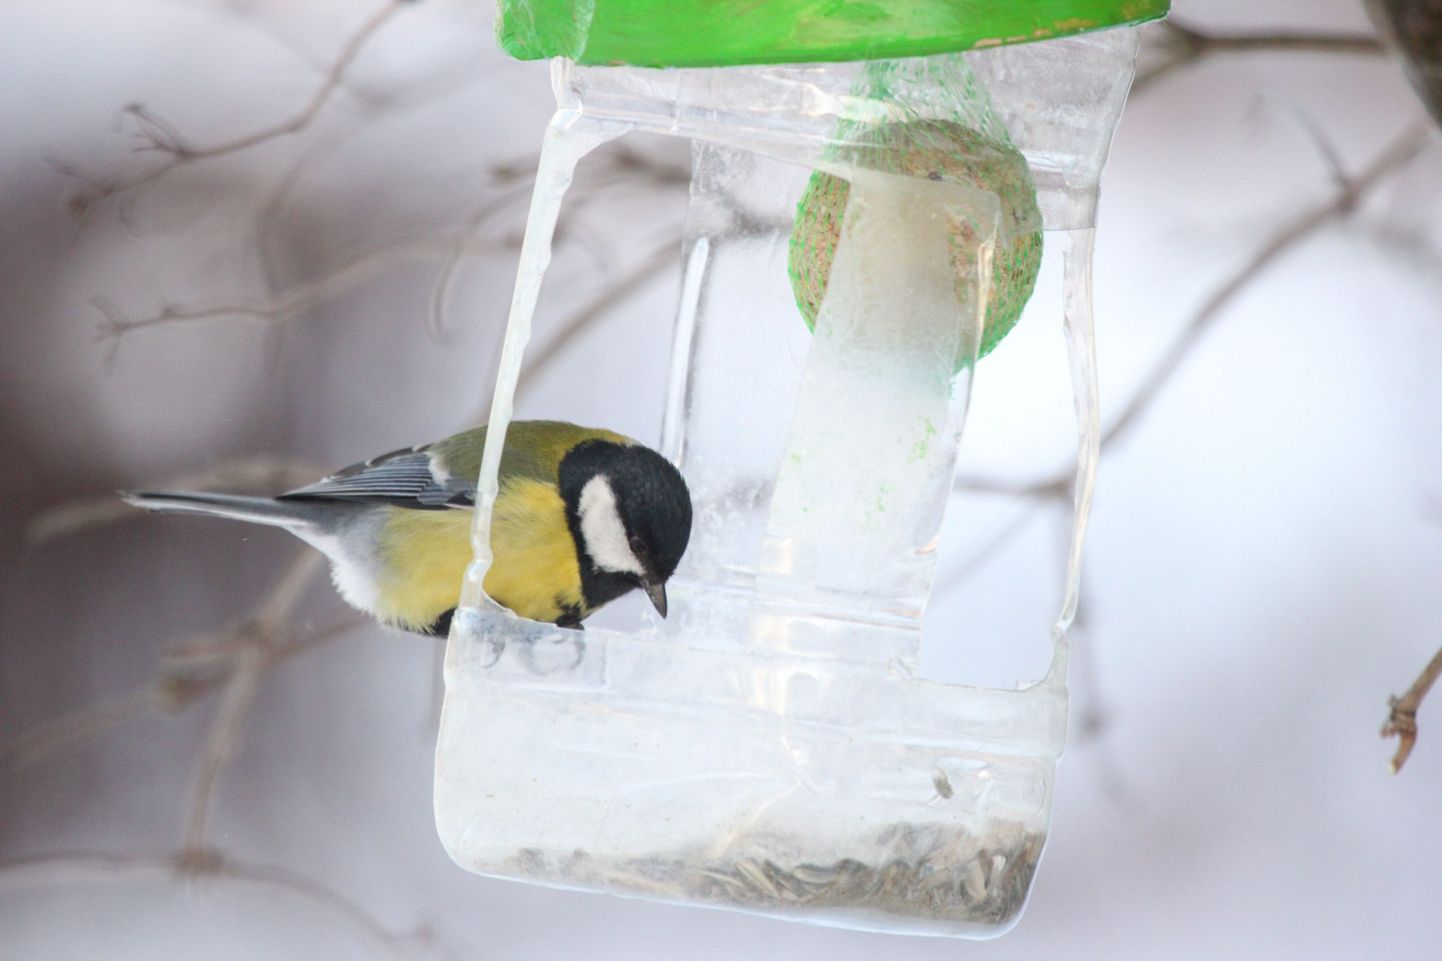 Lindude talvine toitmine.